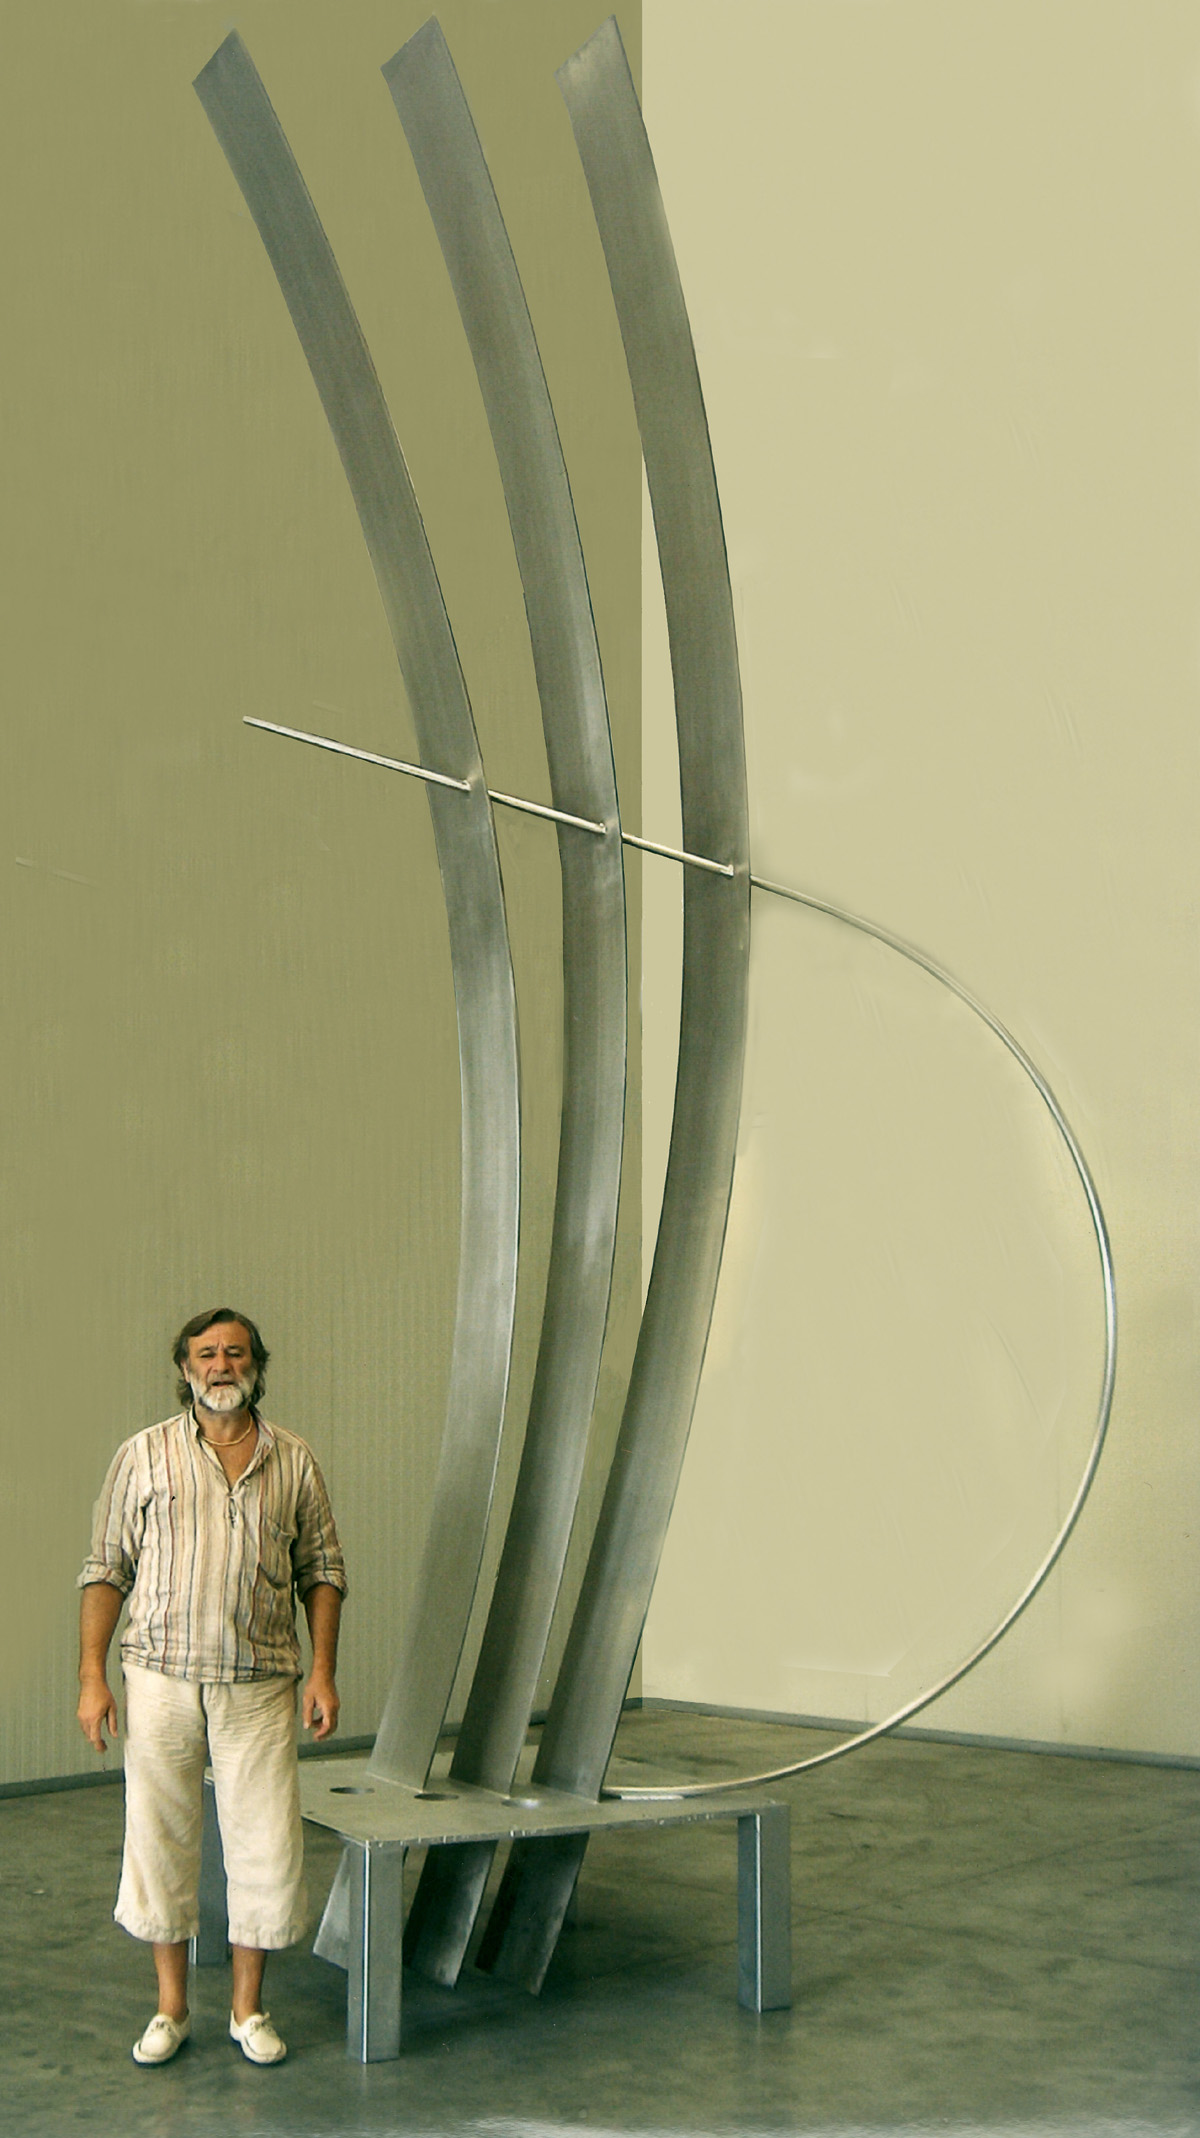 Roberto Fabiani ao lado da escultura III Millenium<a style='float:right;color:#ccc' href='https://www3.al.sp.gov.br/repositorio/noticia/12-2008/MUSEU DE ARTE - FOTO ROBERTO FABIANI.jpg' target=_blank><i class='bi bi-zoom-in'></i> Clique para ver a imagem </a>